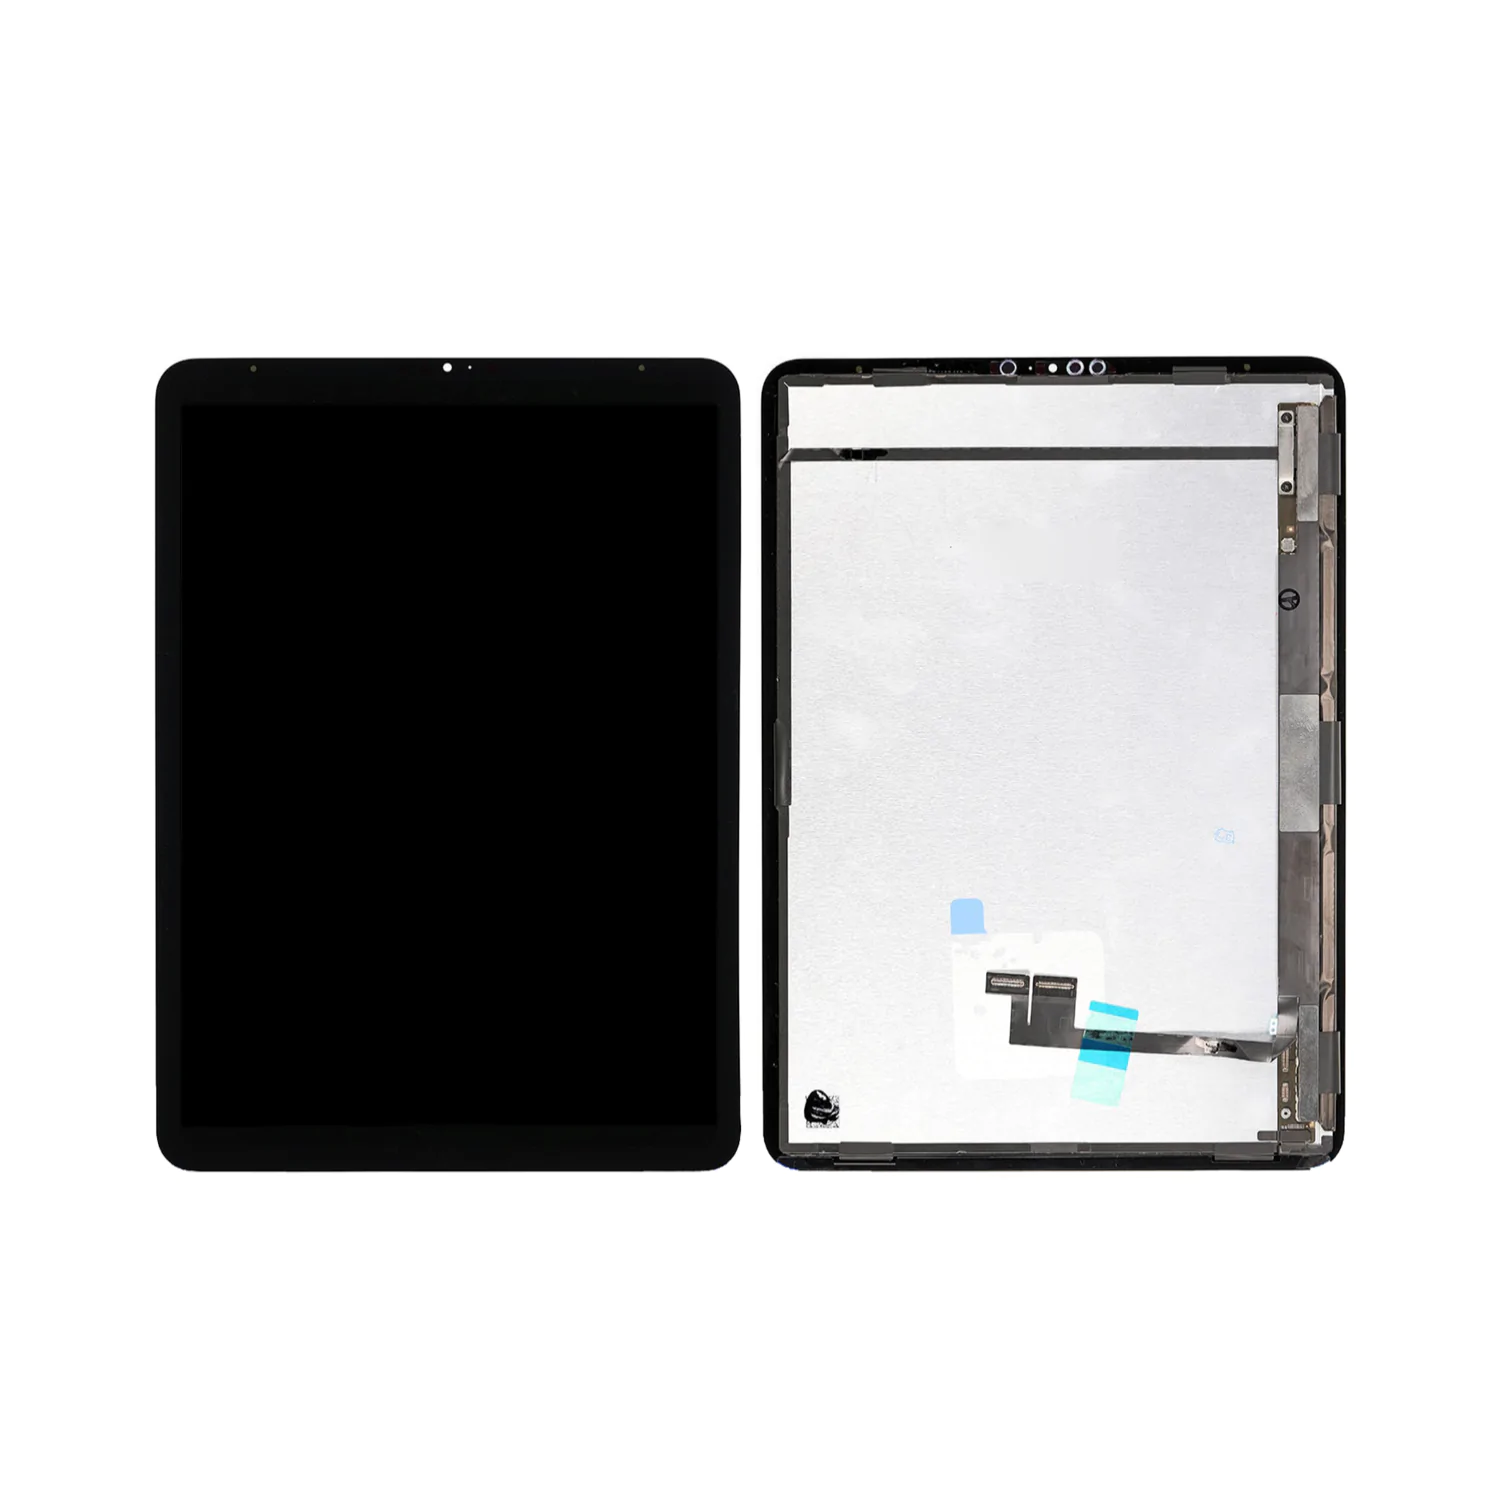 Pantalla Original Refurb Apple iPad Pro 11" (2e génération) A1934 / A1980/A2013/A2068/A2228/A2230 Negro